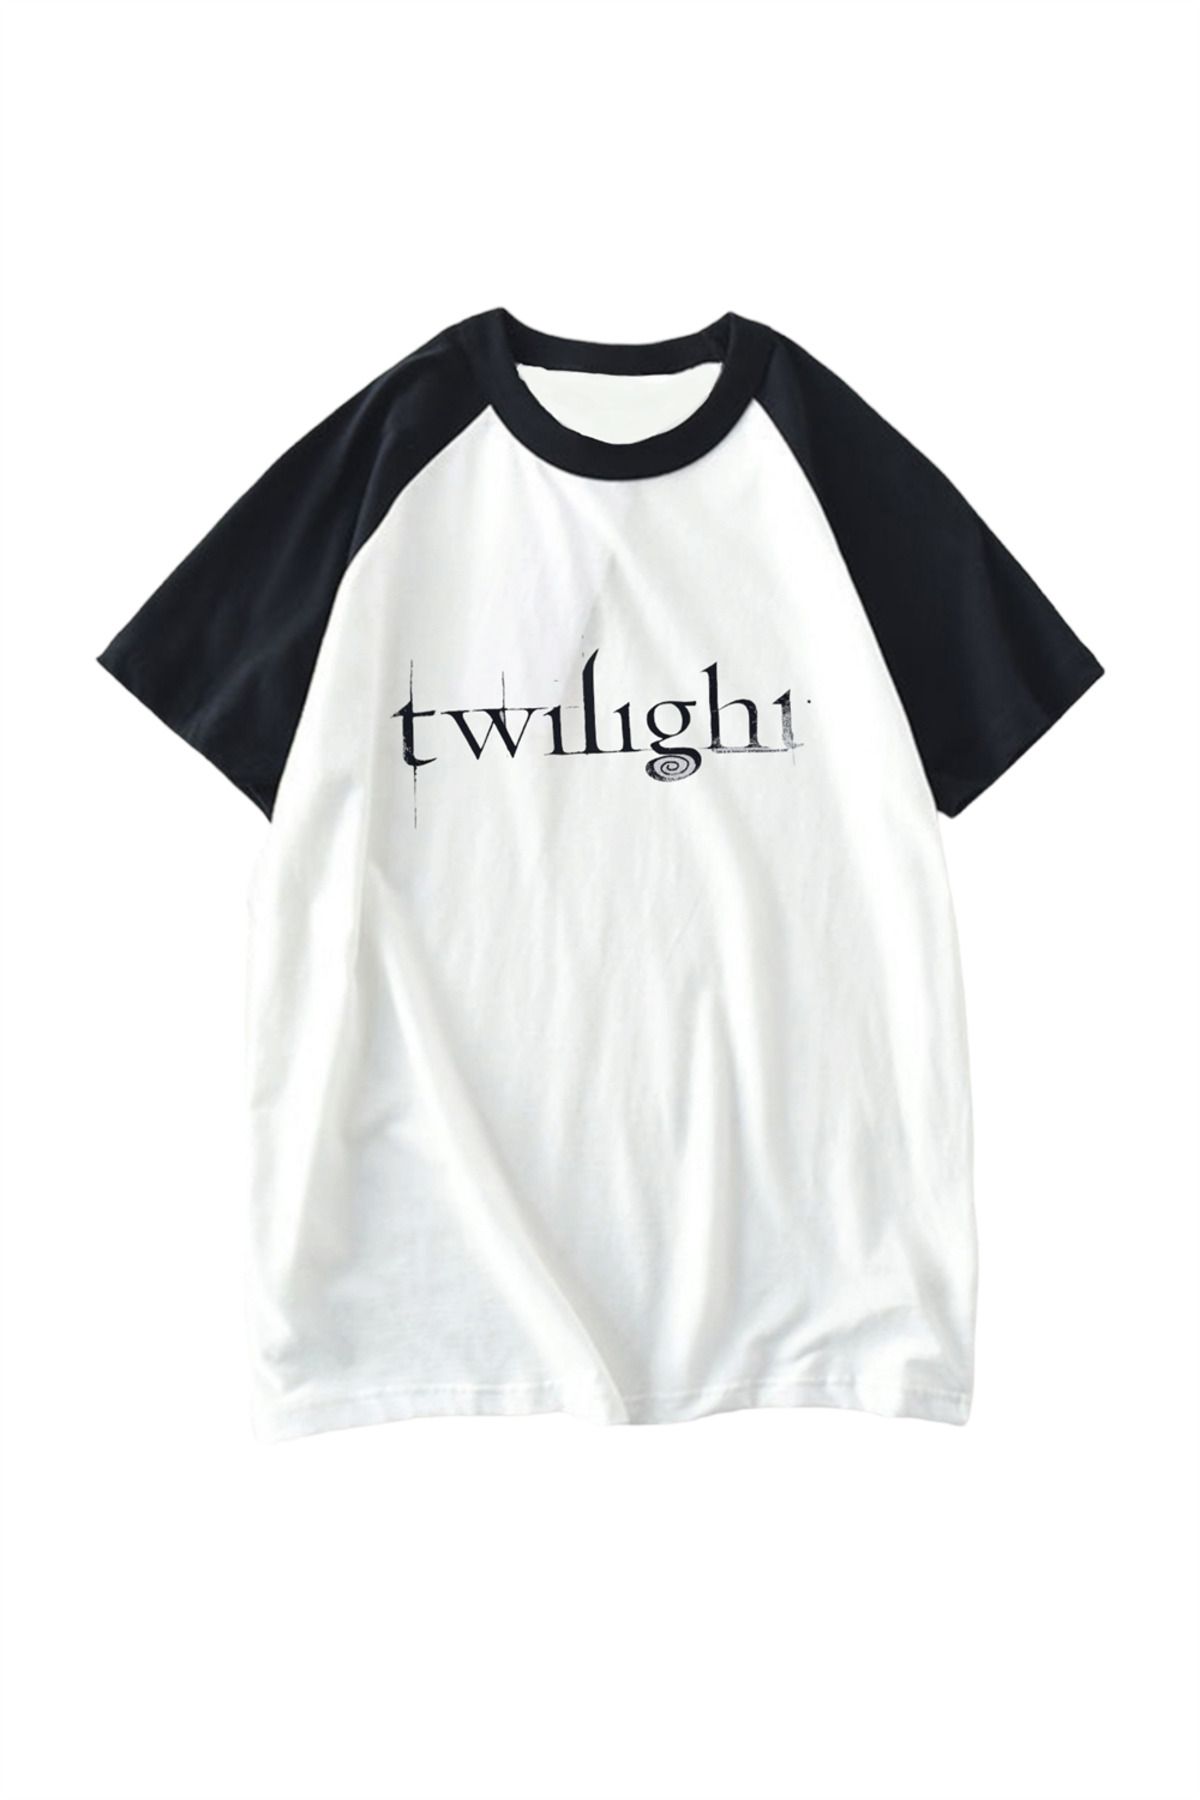 Carpe Twilight Oversize T-shirt